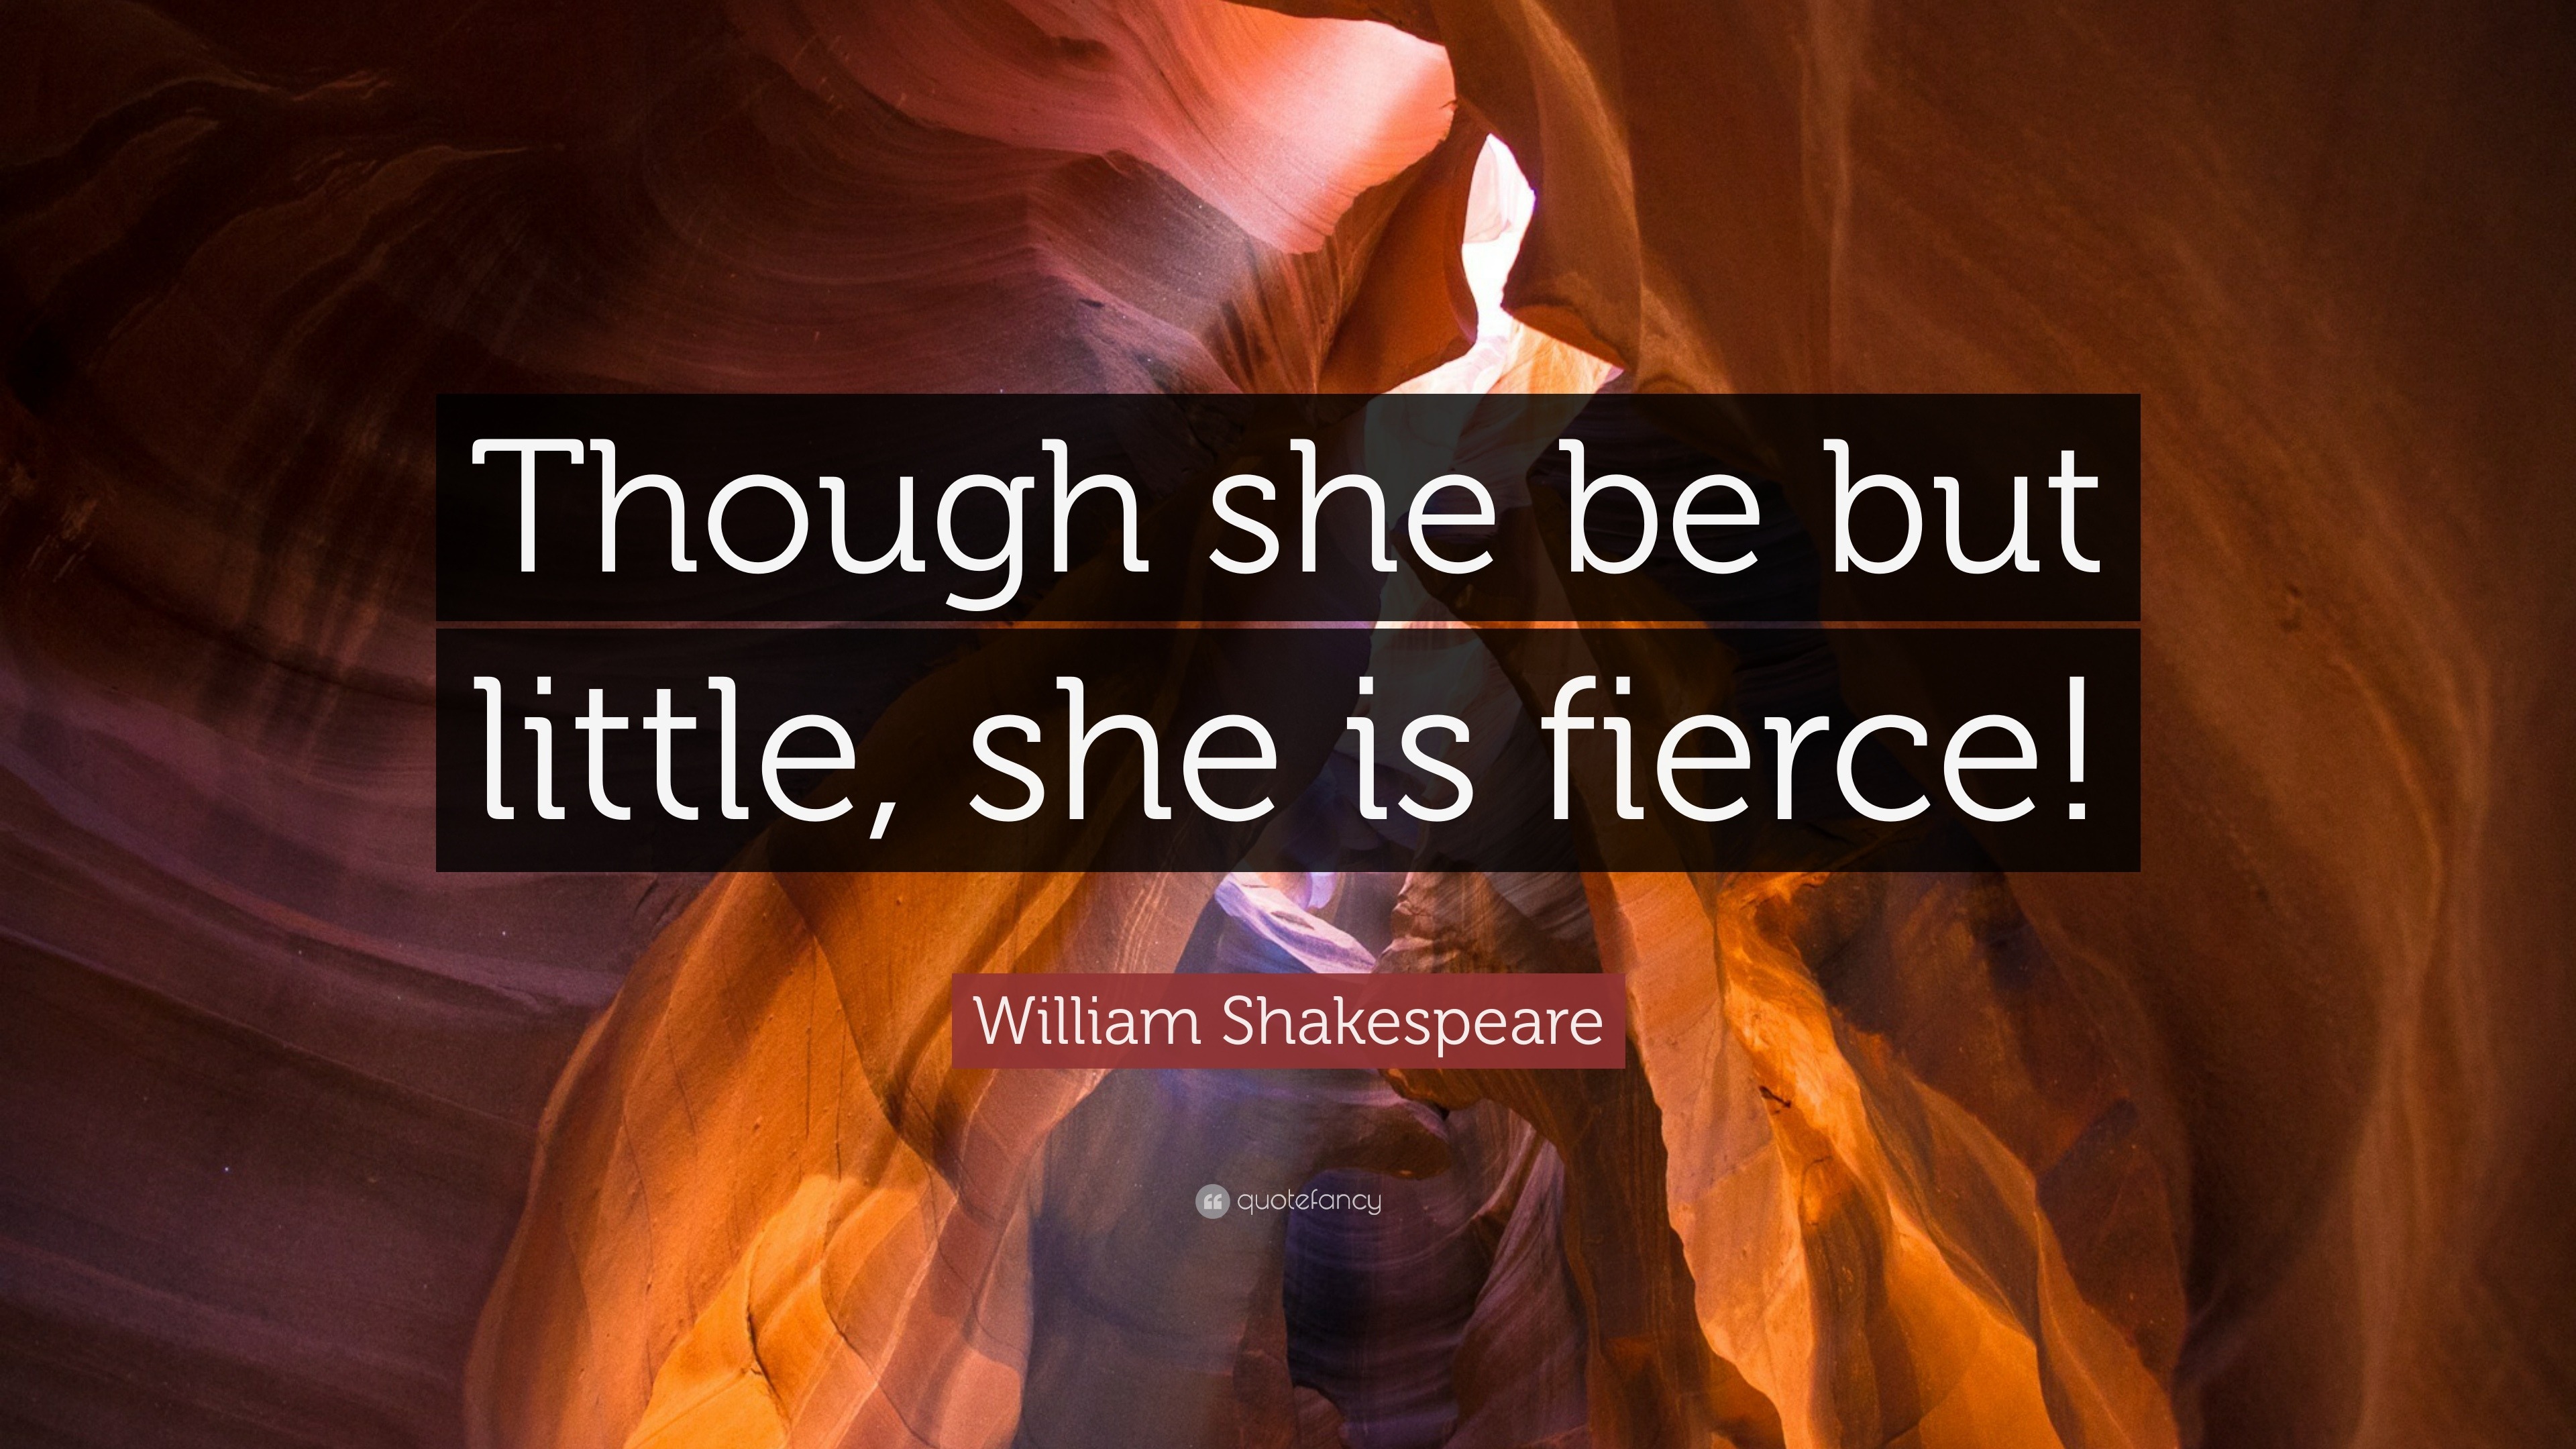 “Though she be but little, she is fierce!”